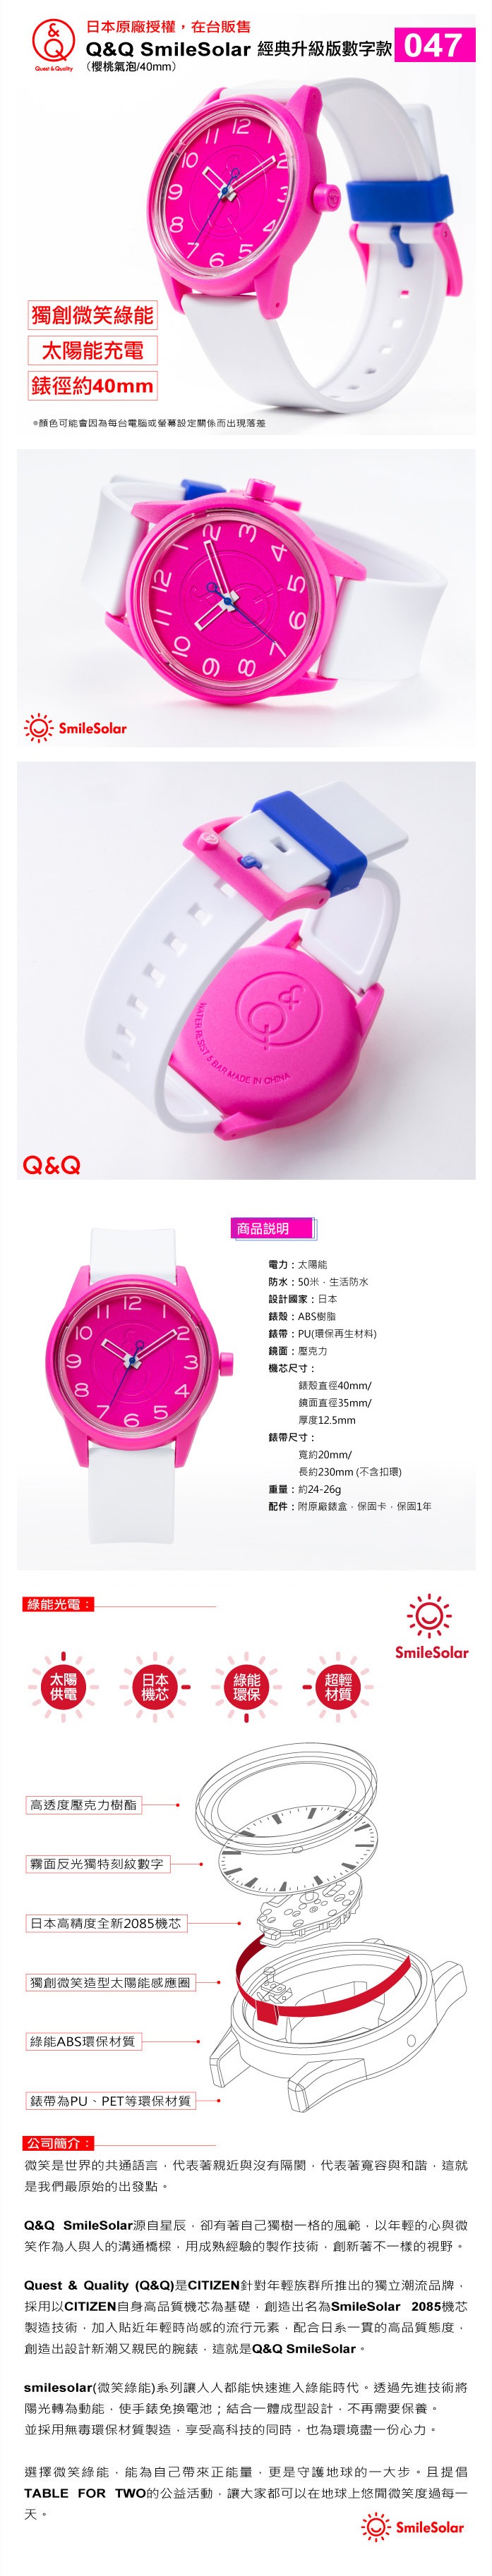 Q＆Q SmileSolar 經典升級數字款 太陽能手錶 (047 櫻桃氣泡/40mm)